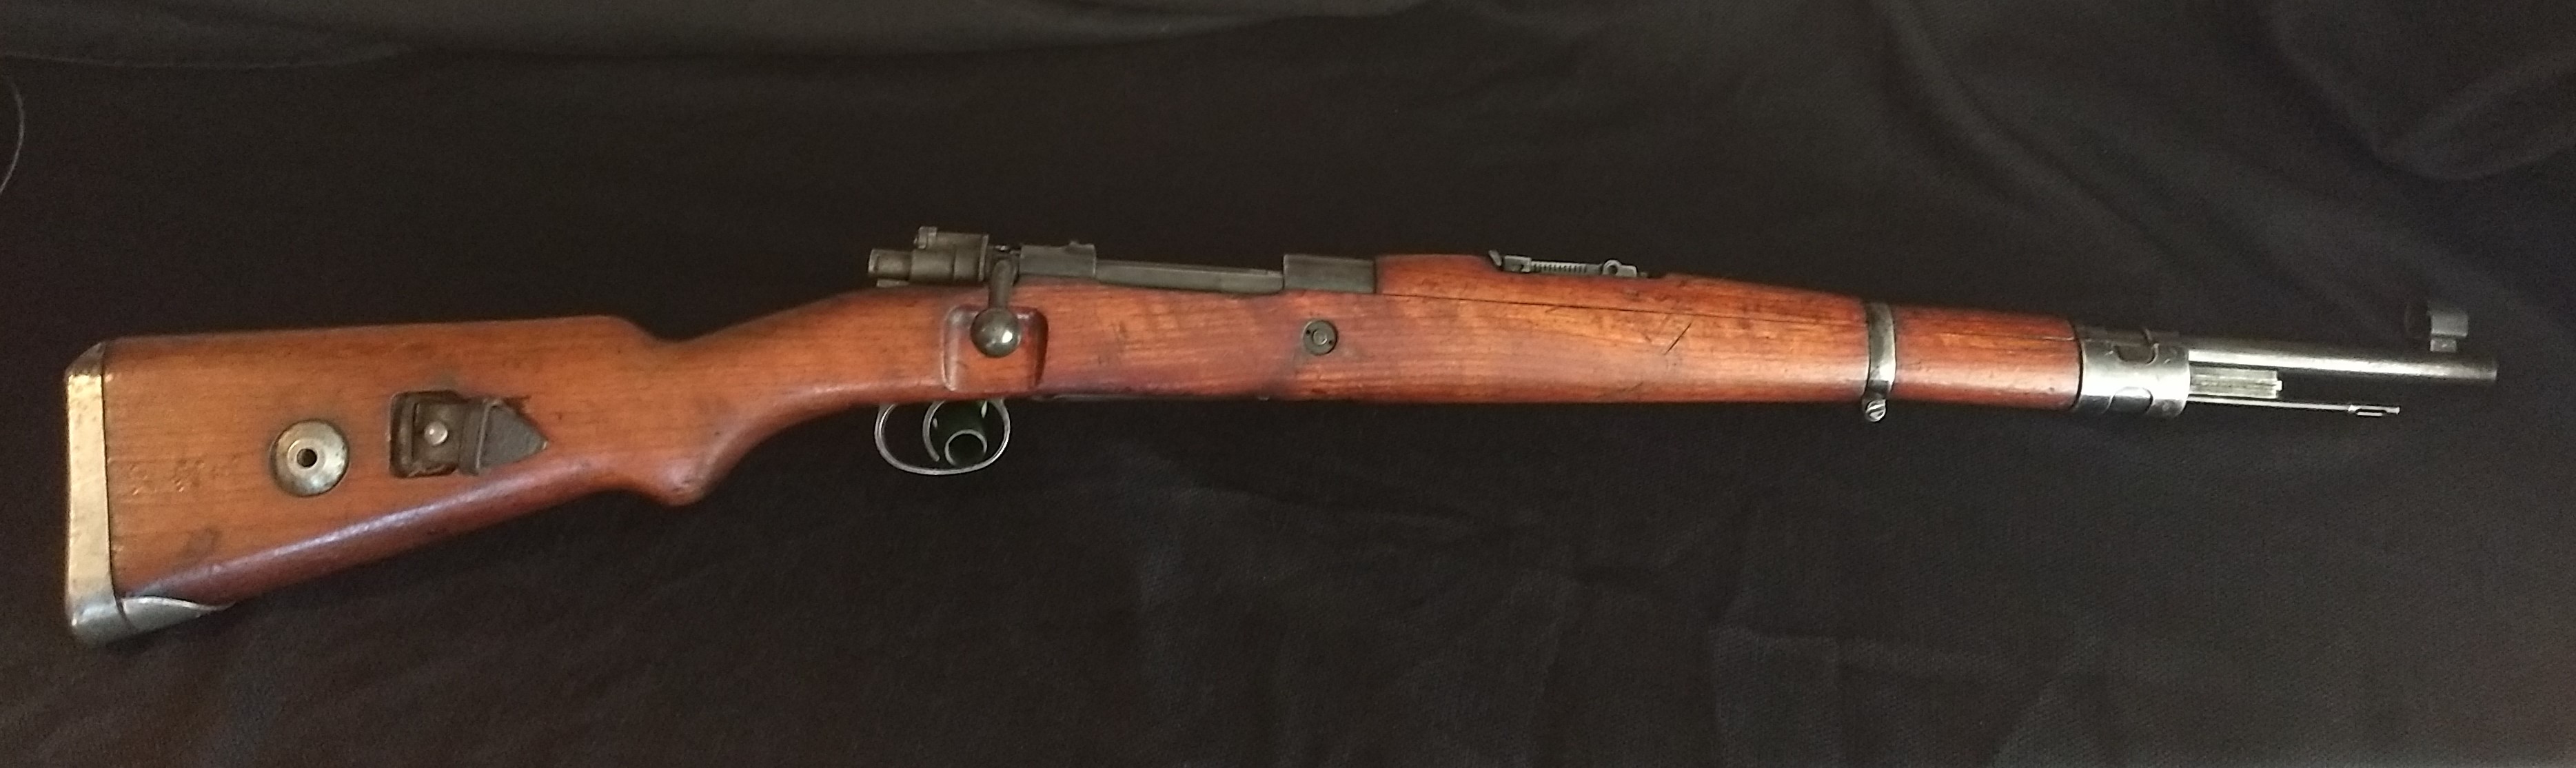 ww2 german mauser rifle